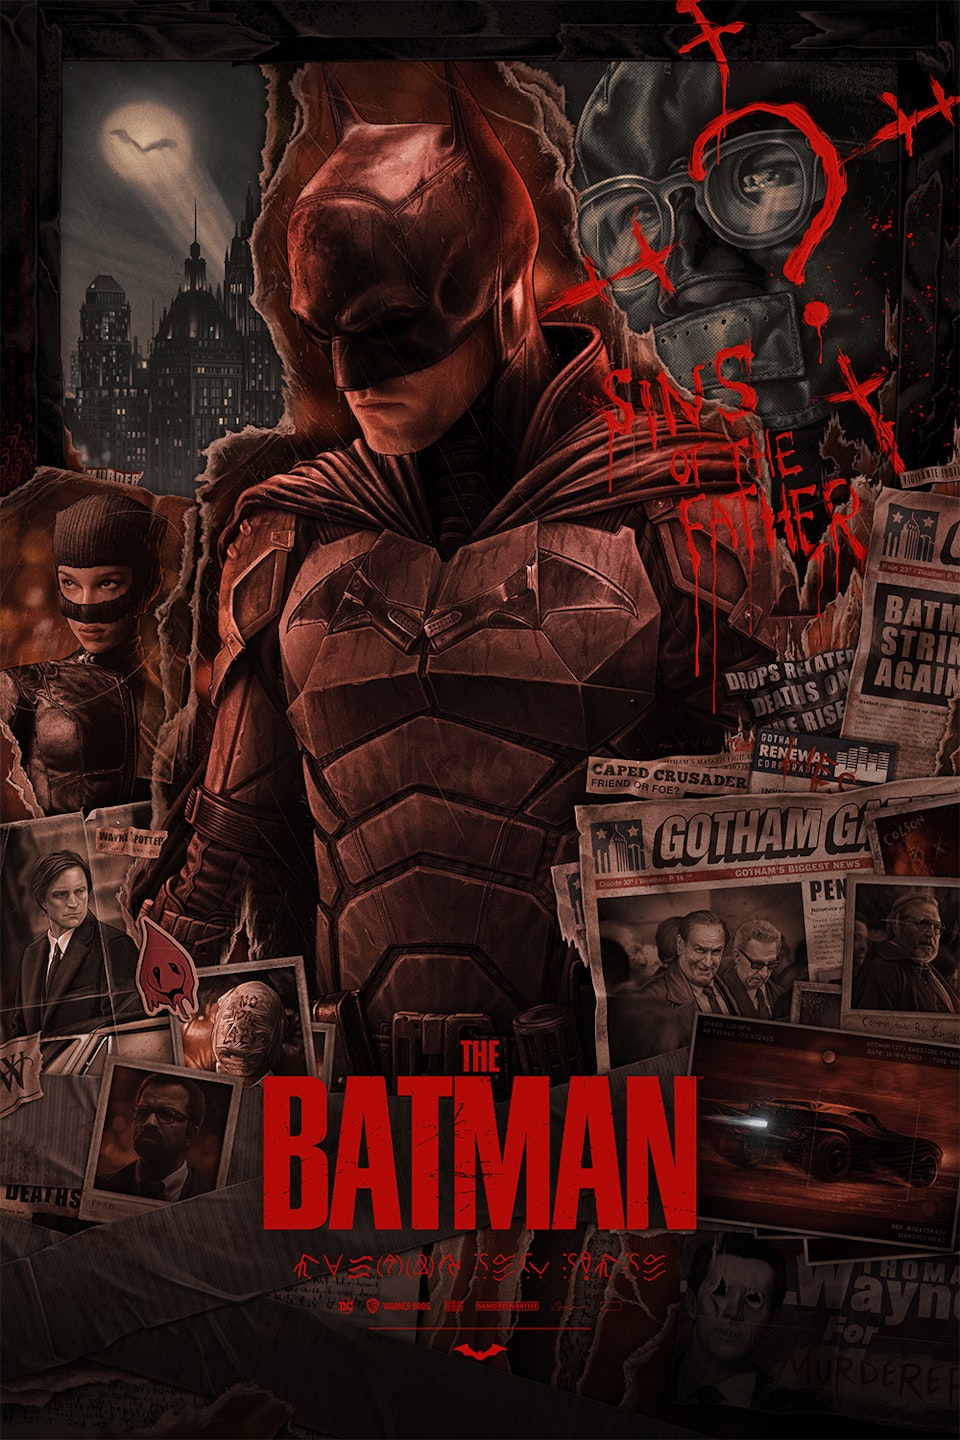 The Batman - Officially licensed poster (Bottleneck Gallery) - The Batman - poster illustration.

Variant edition of 100

Officially licensed

24 x 36 inches.